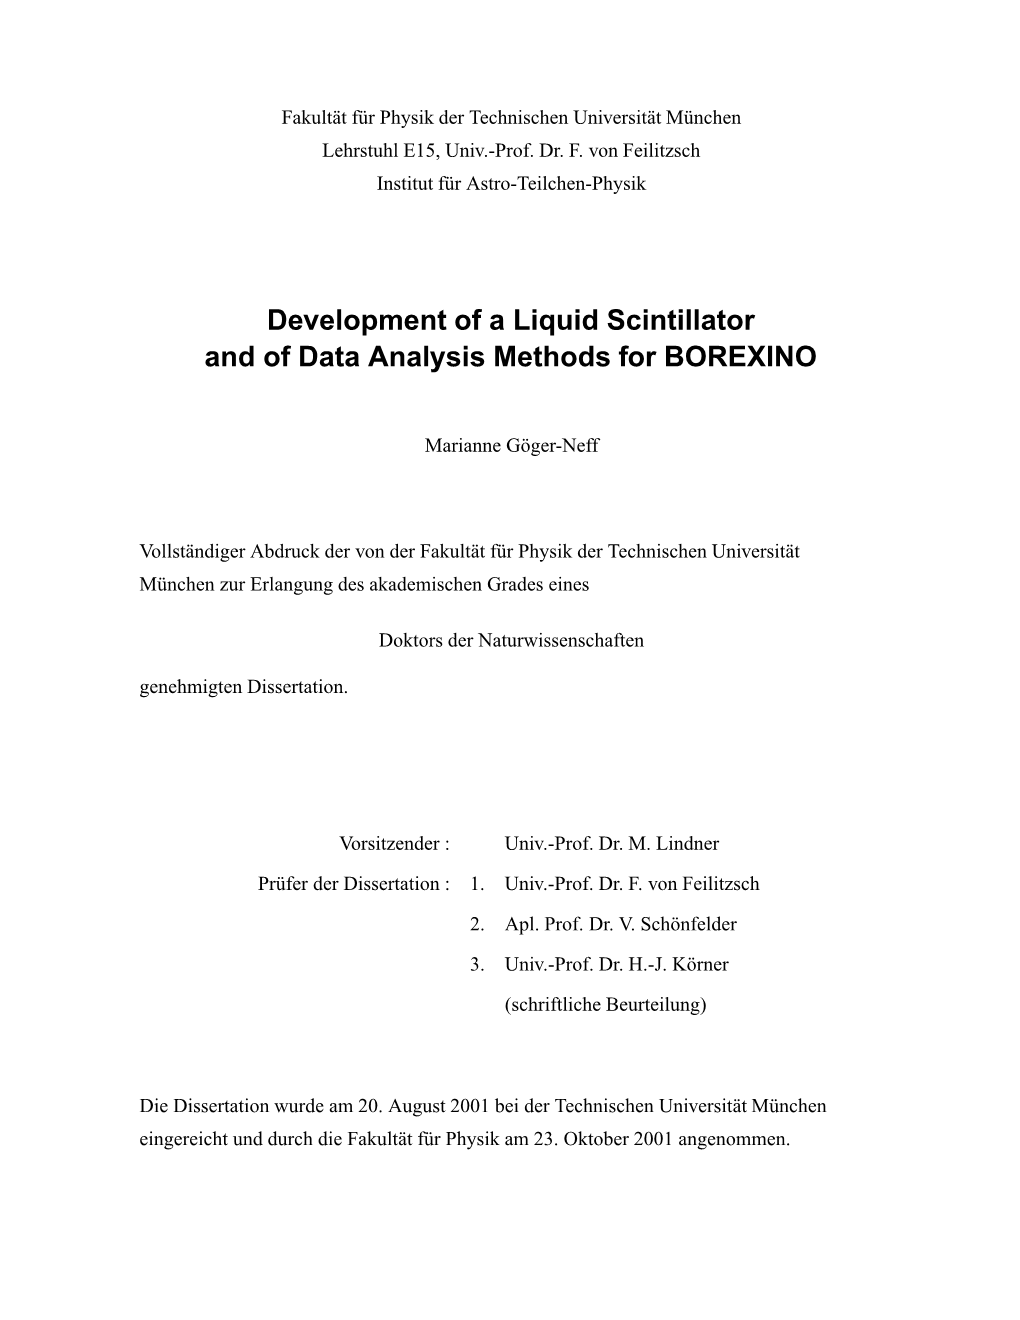 Development of a Liquid Scintillator and of Data Analysis Methods for BOREXINO